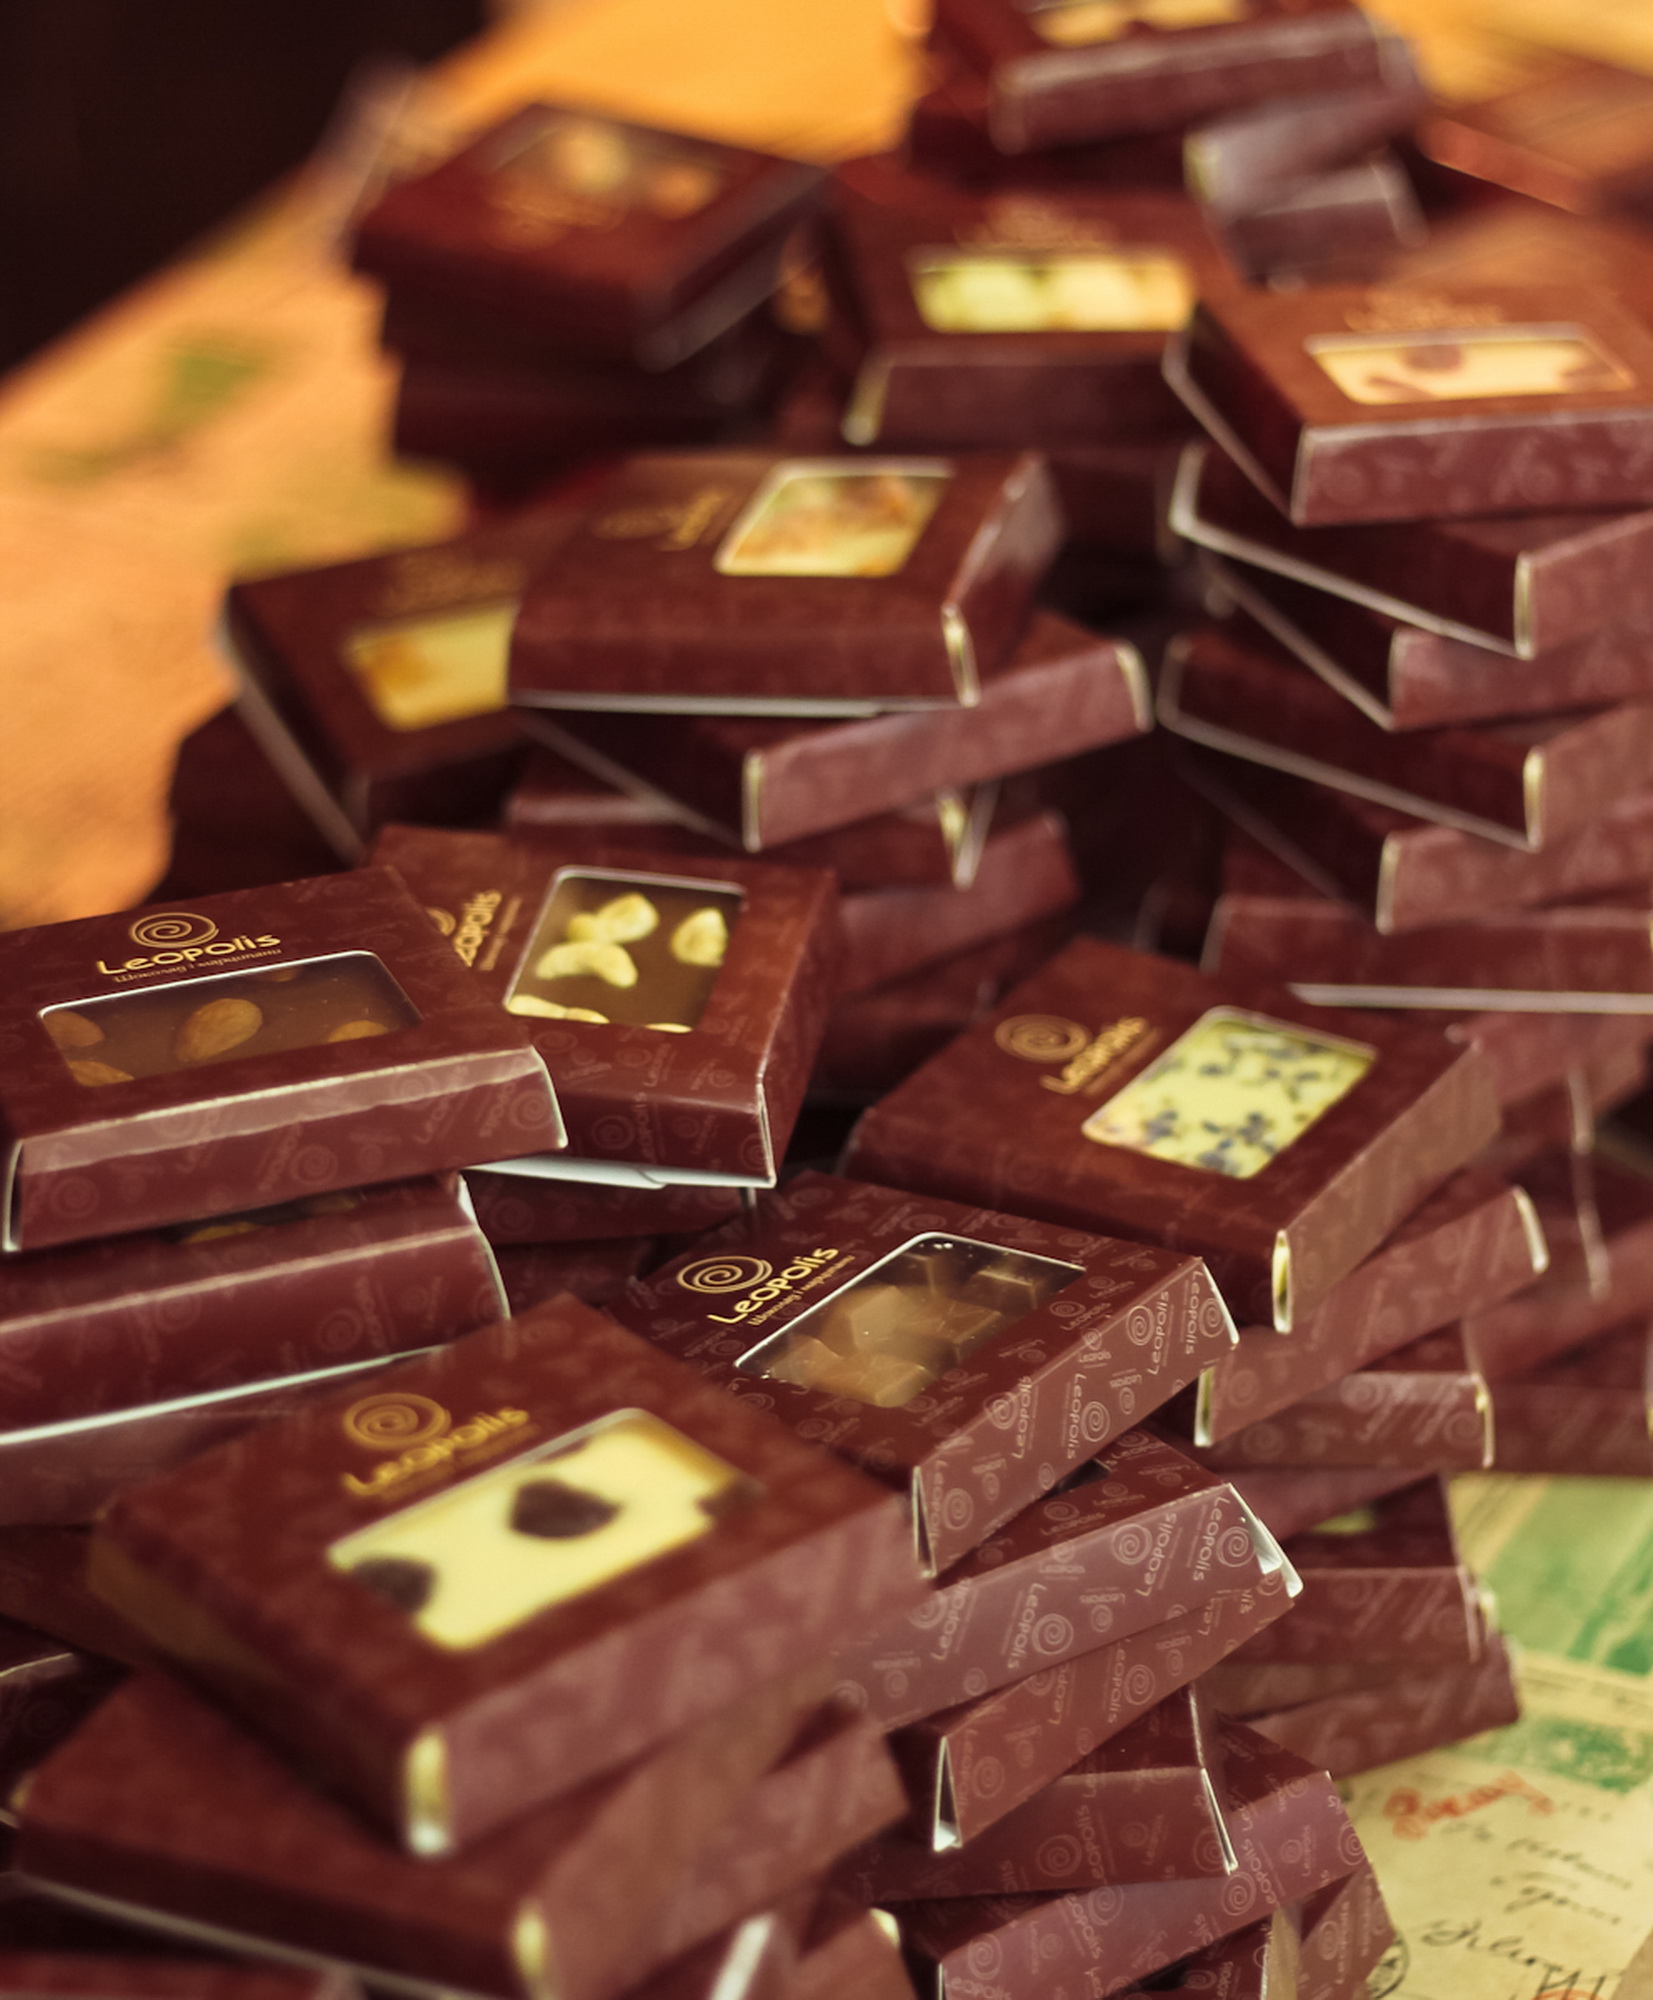 Національне Свято Шоколаду © shokolad.lviv.ua